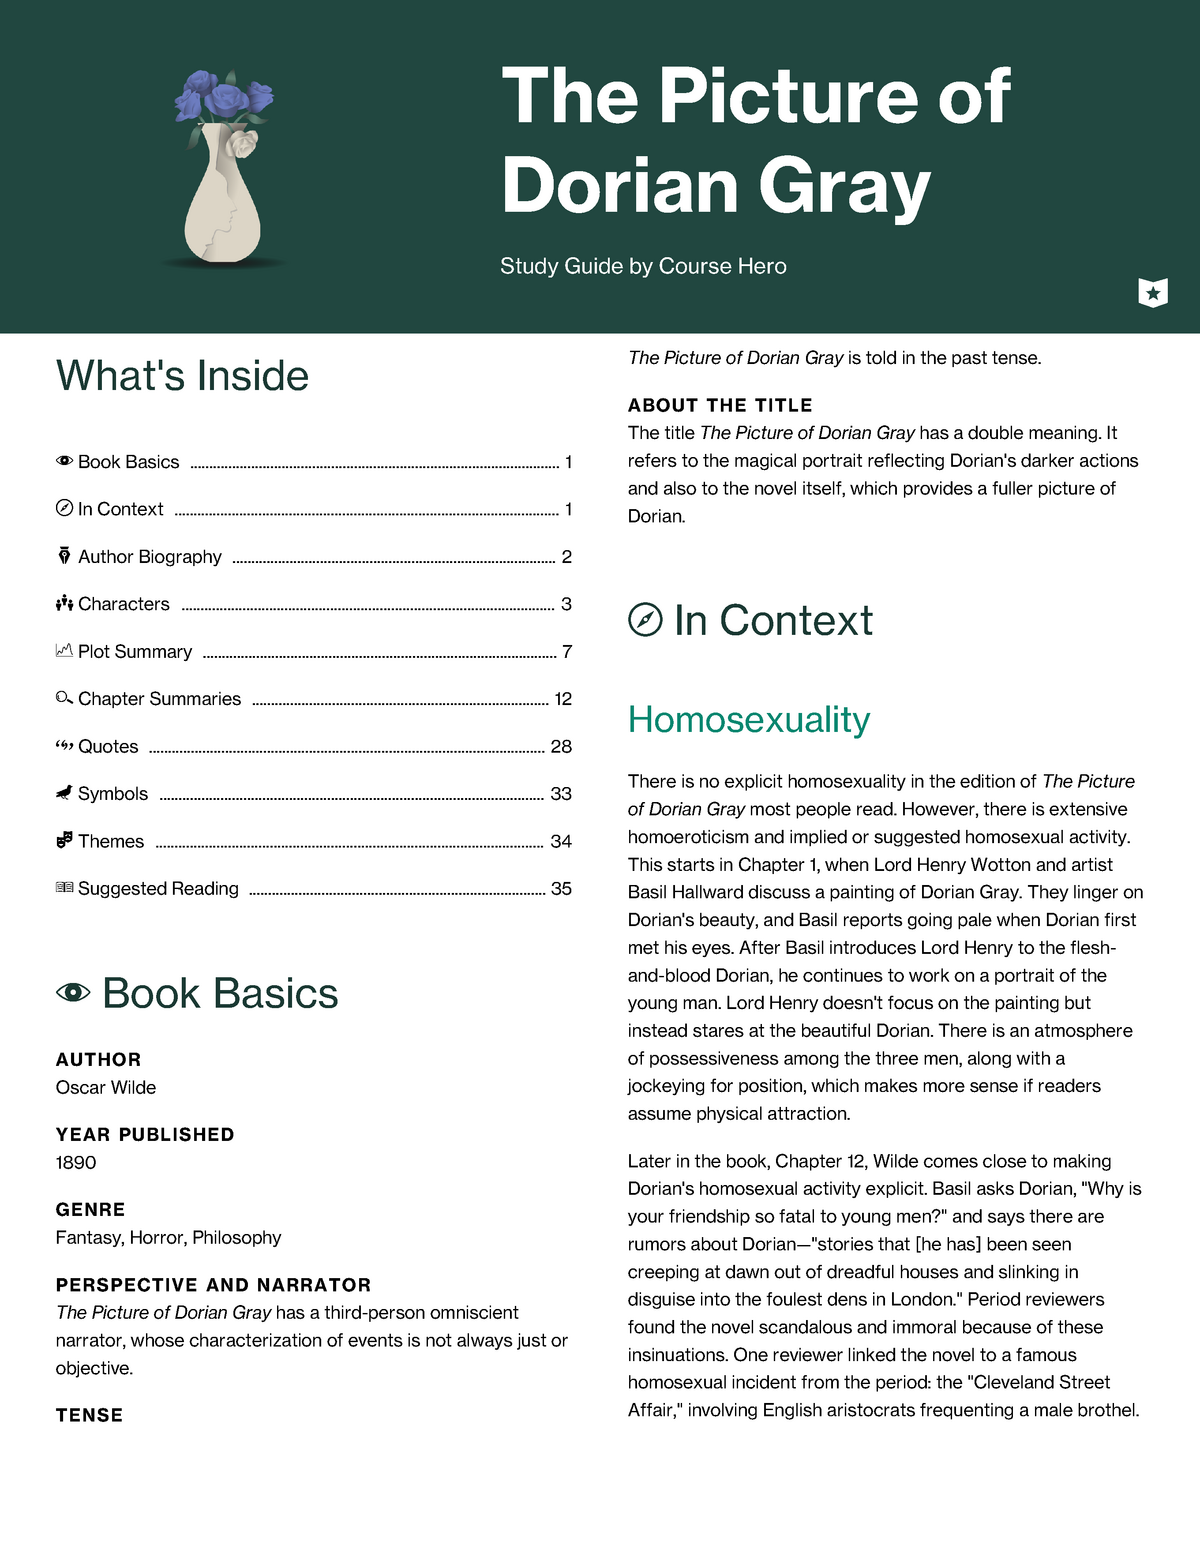 essay topics for dorian gray